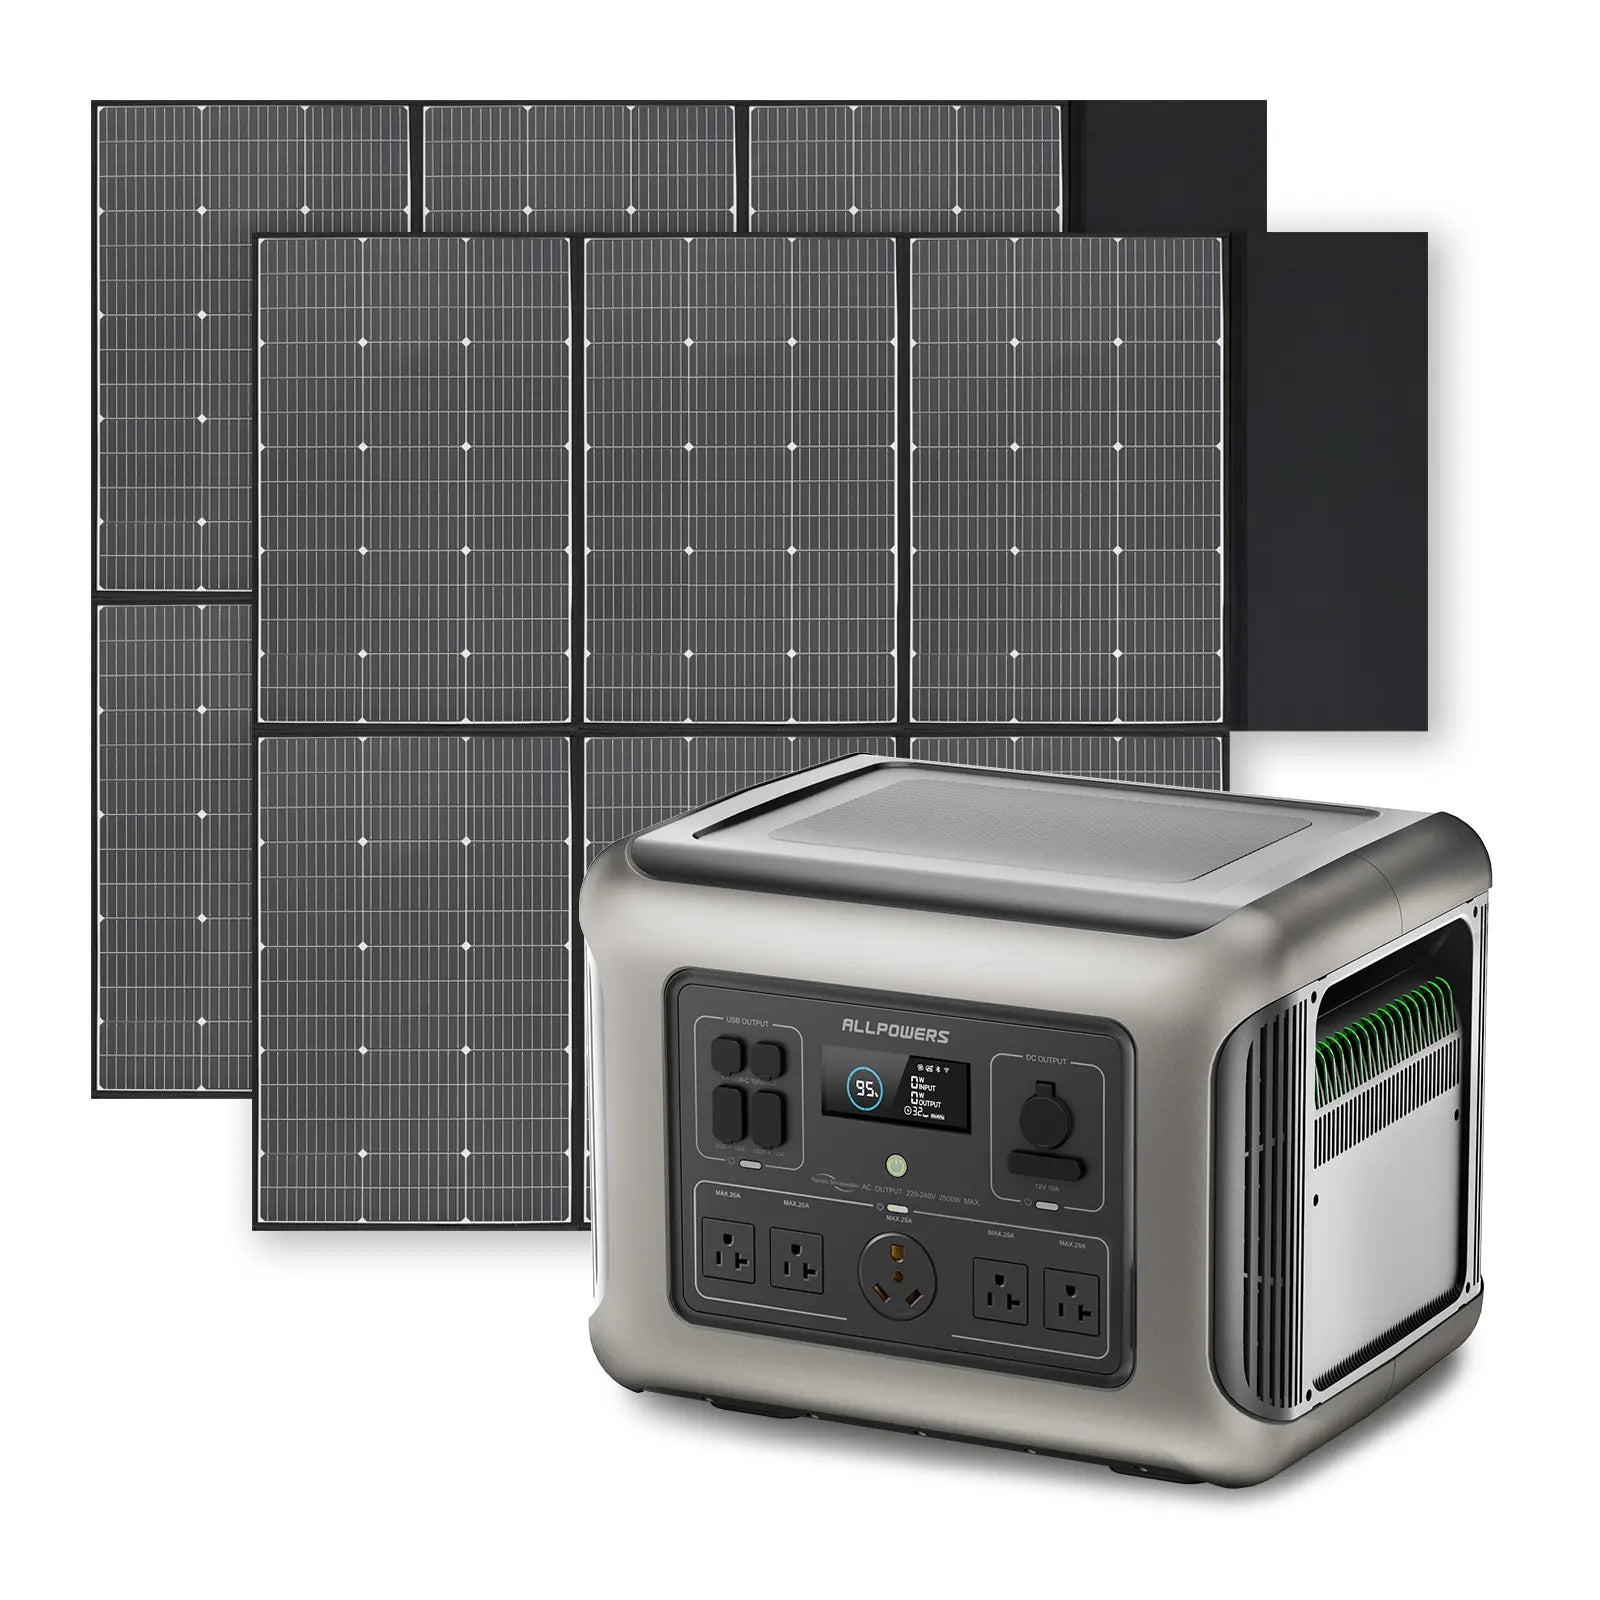 ALLPOWERS R2500 Portable Home Backup Power Station 2500W 2016W (R2500 + 2 x SP039 600W Solar Panel)